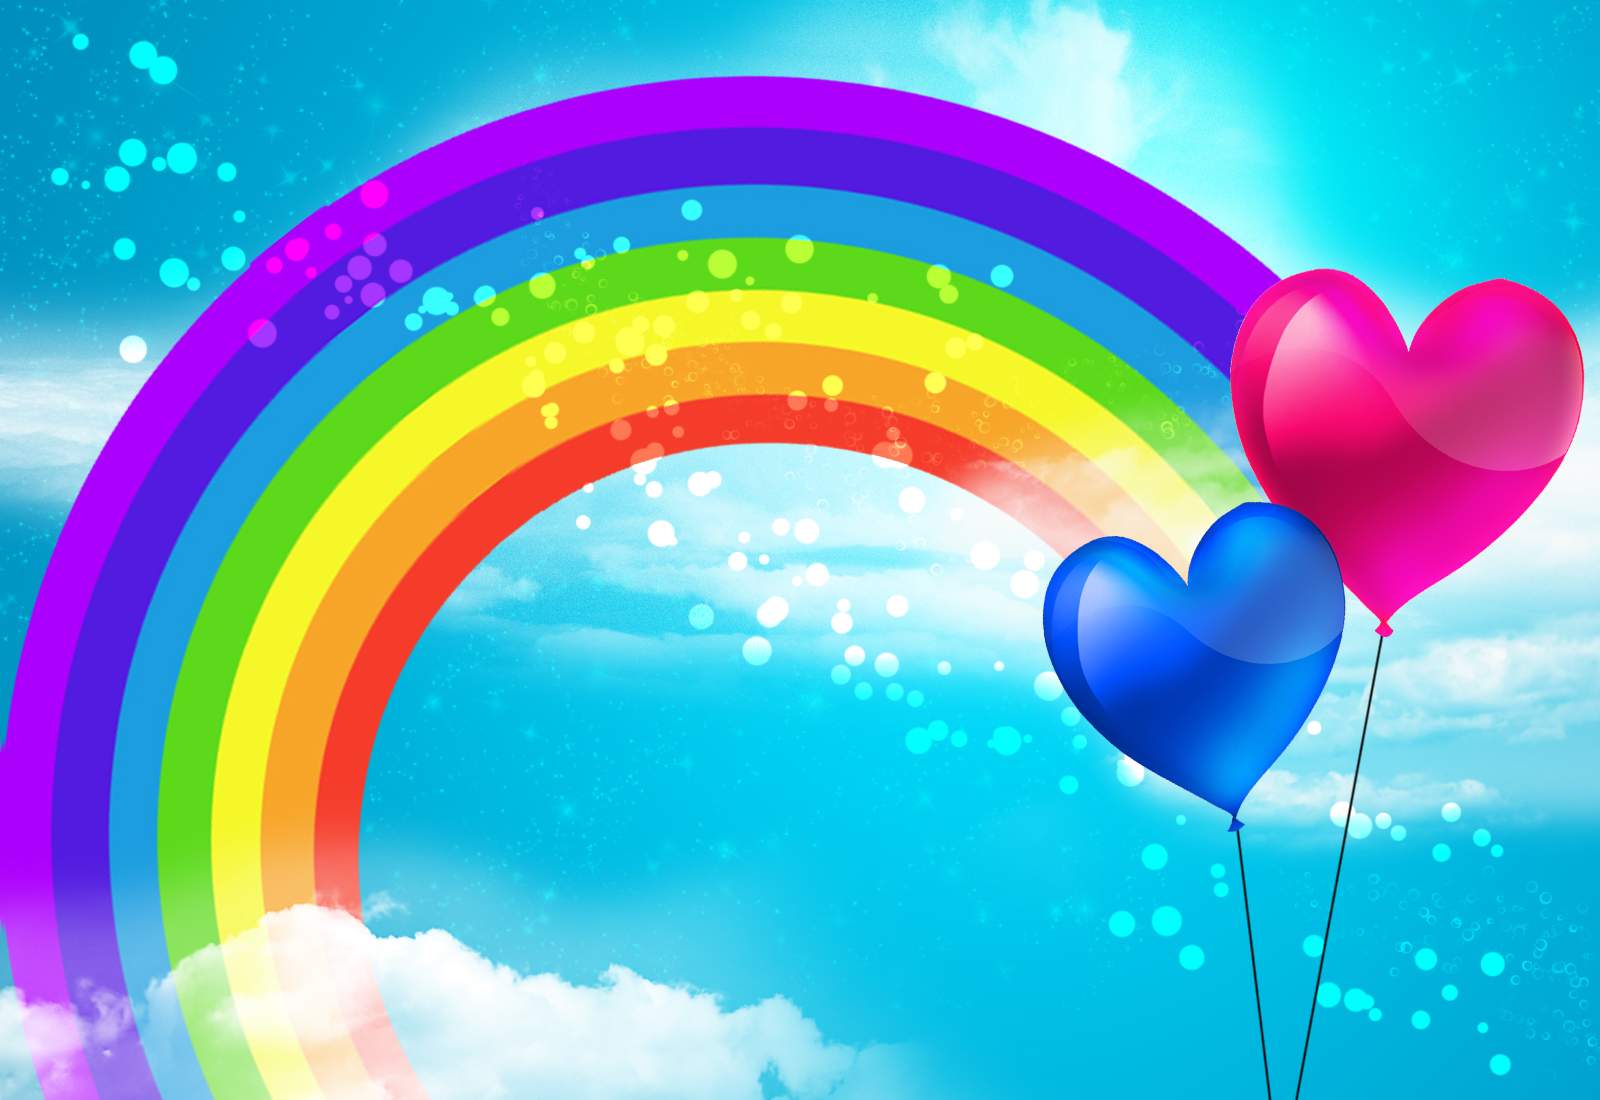 Popular Rainbows Rainbow Os And Background. RKFDNews